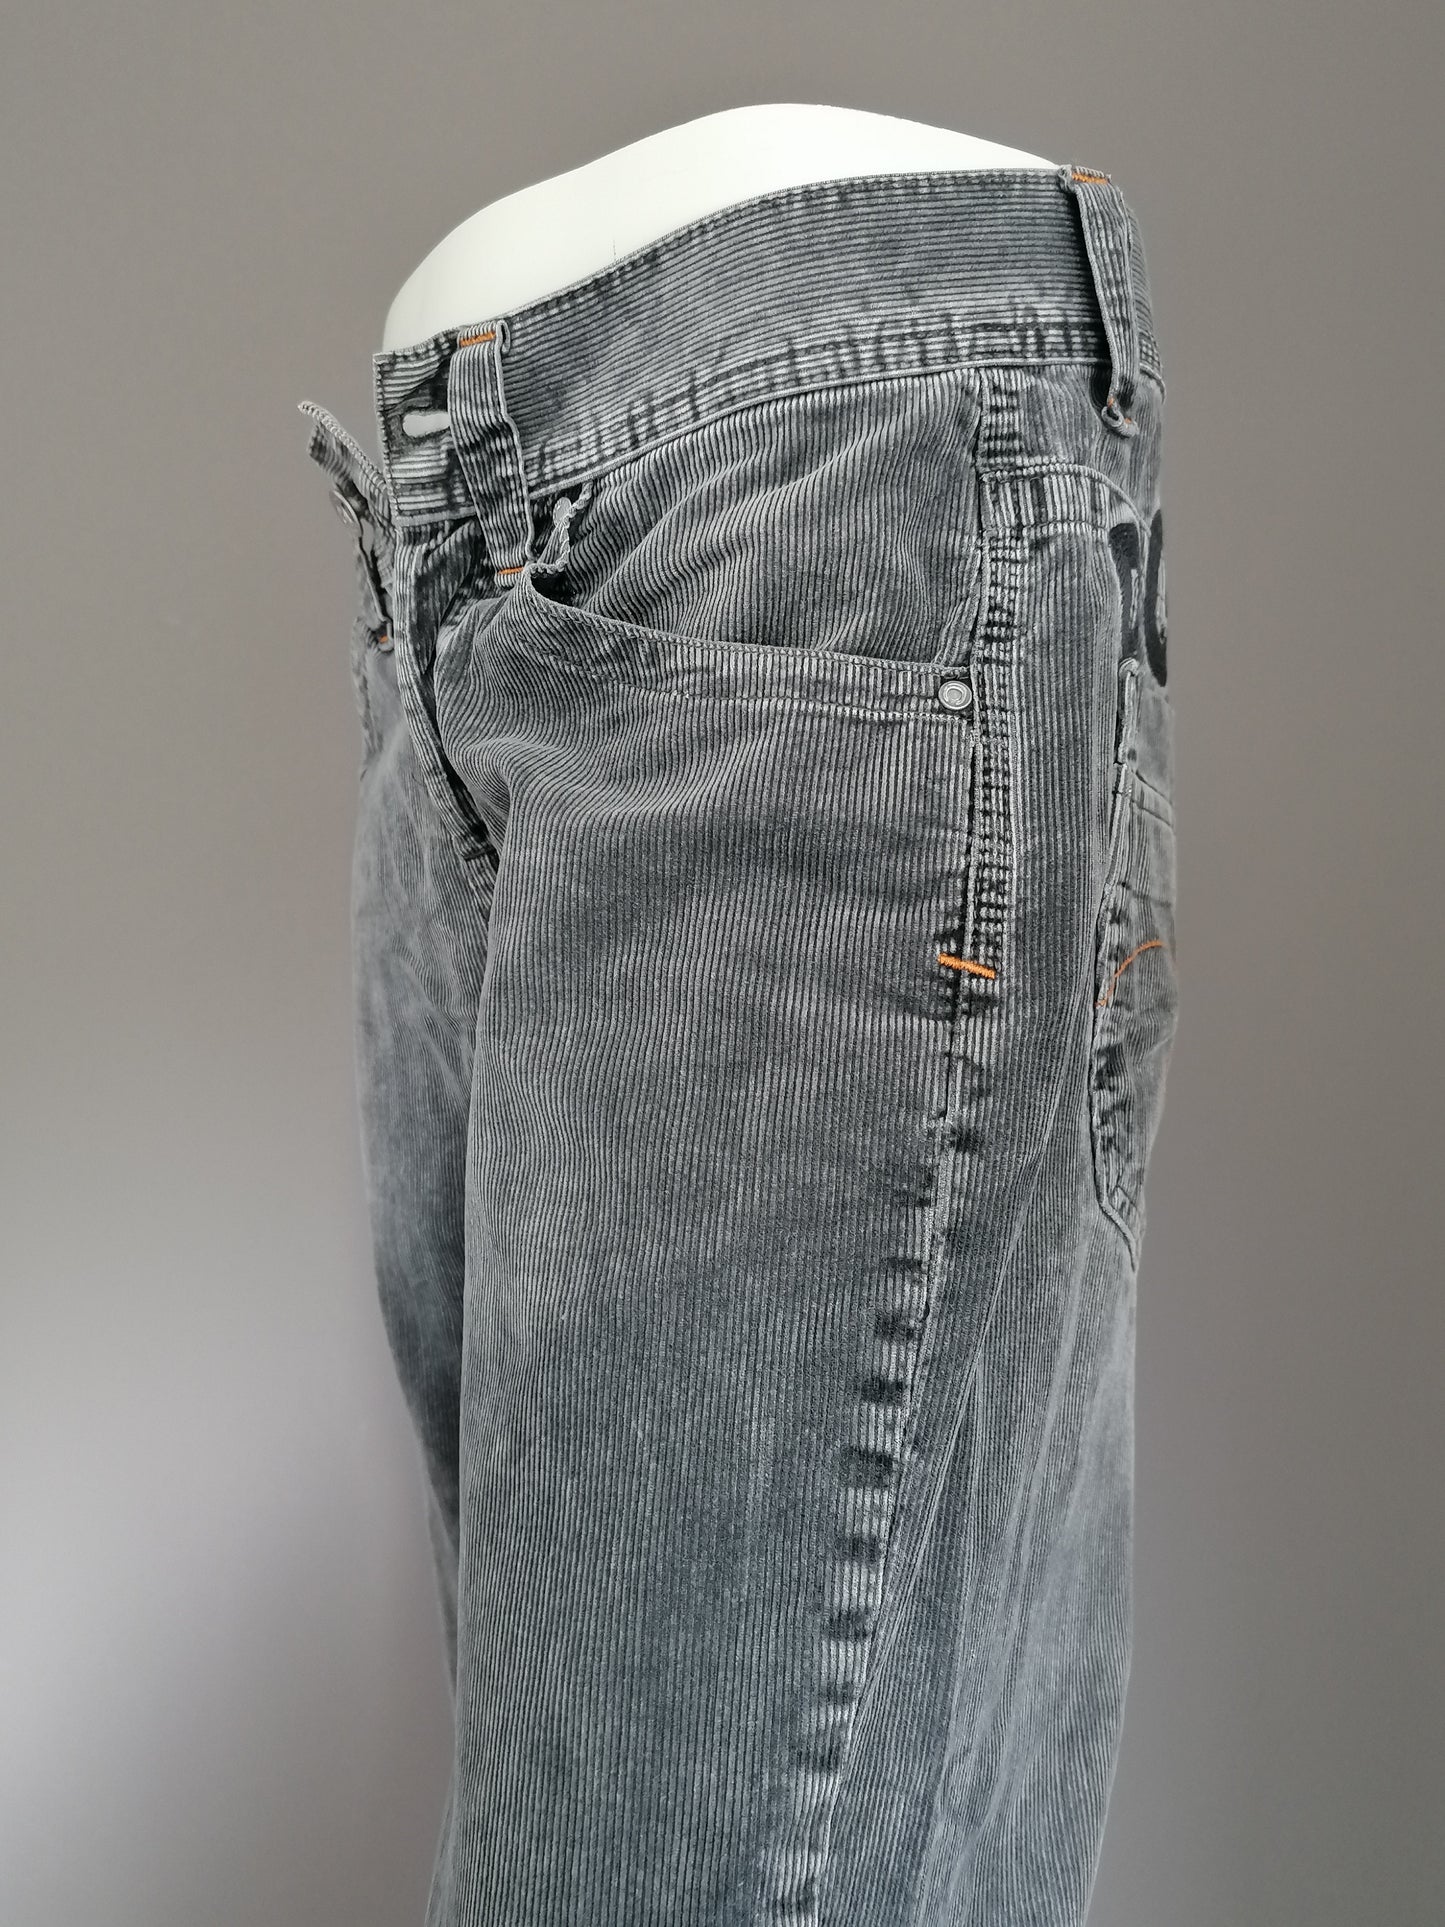 Capsize rib pants. Dark gray colored. Size W30 - L34. Type Low Pocket.